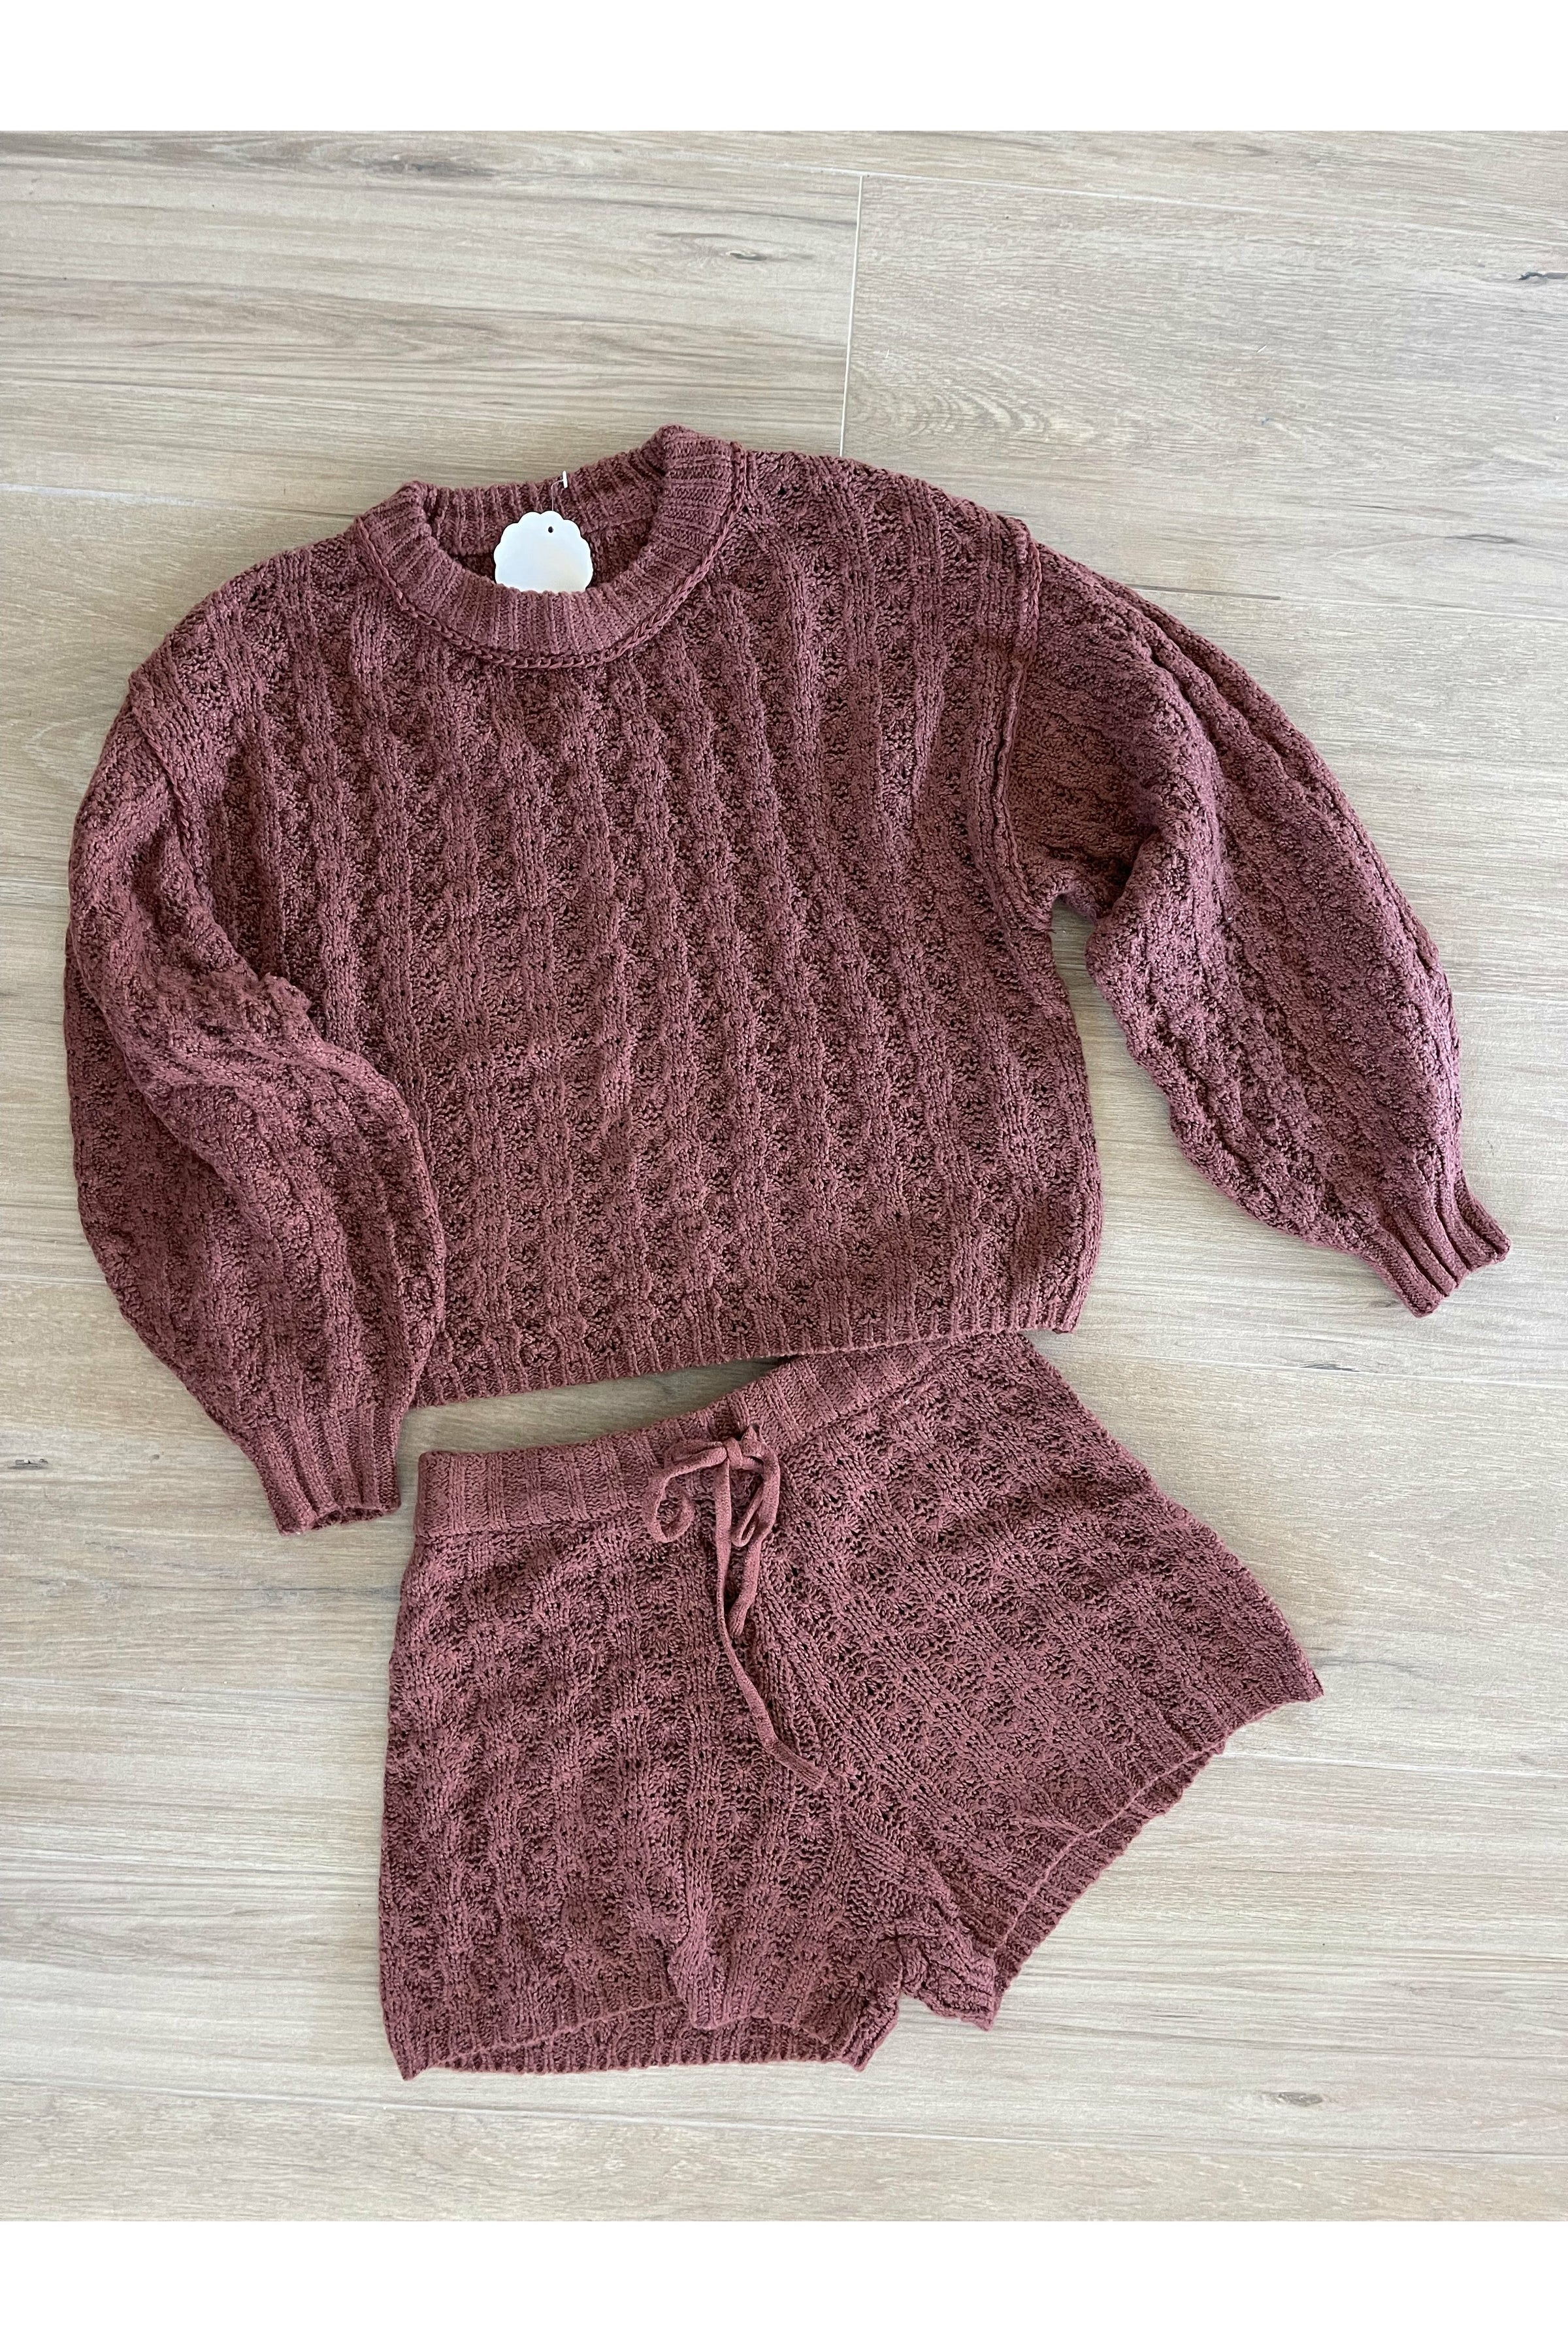 Coffeehouse Sweater Set